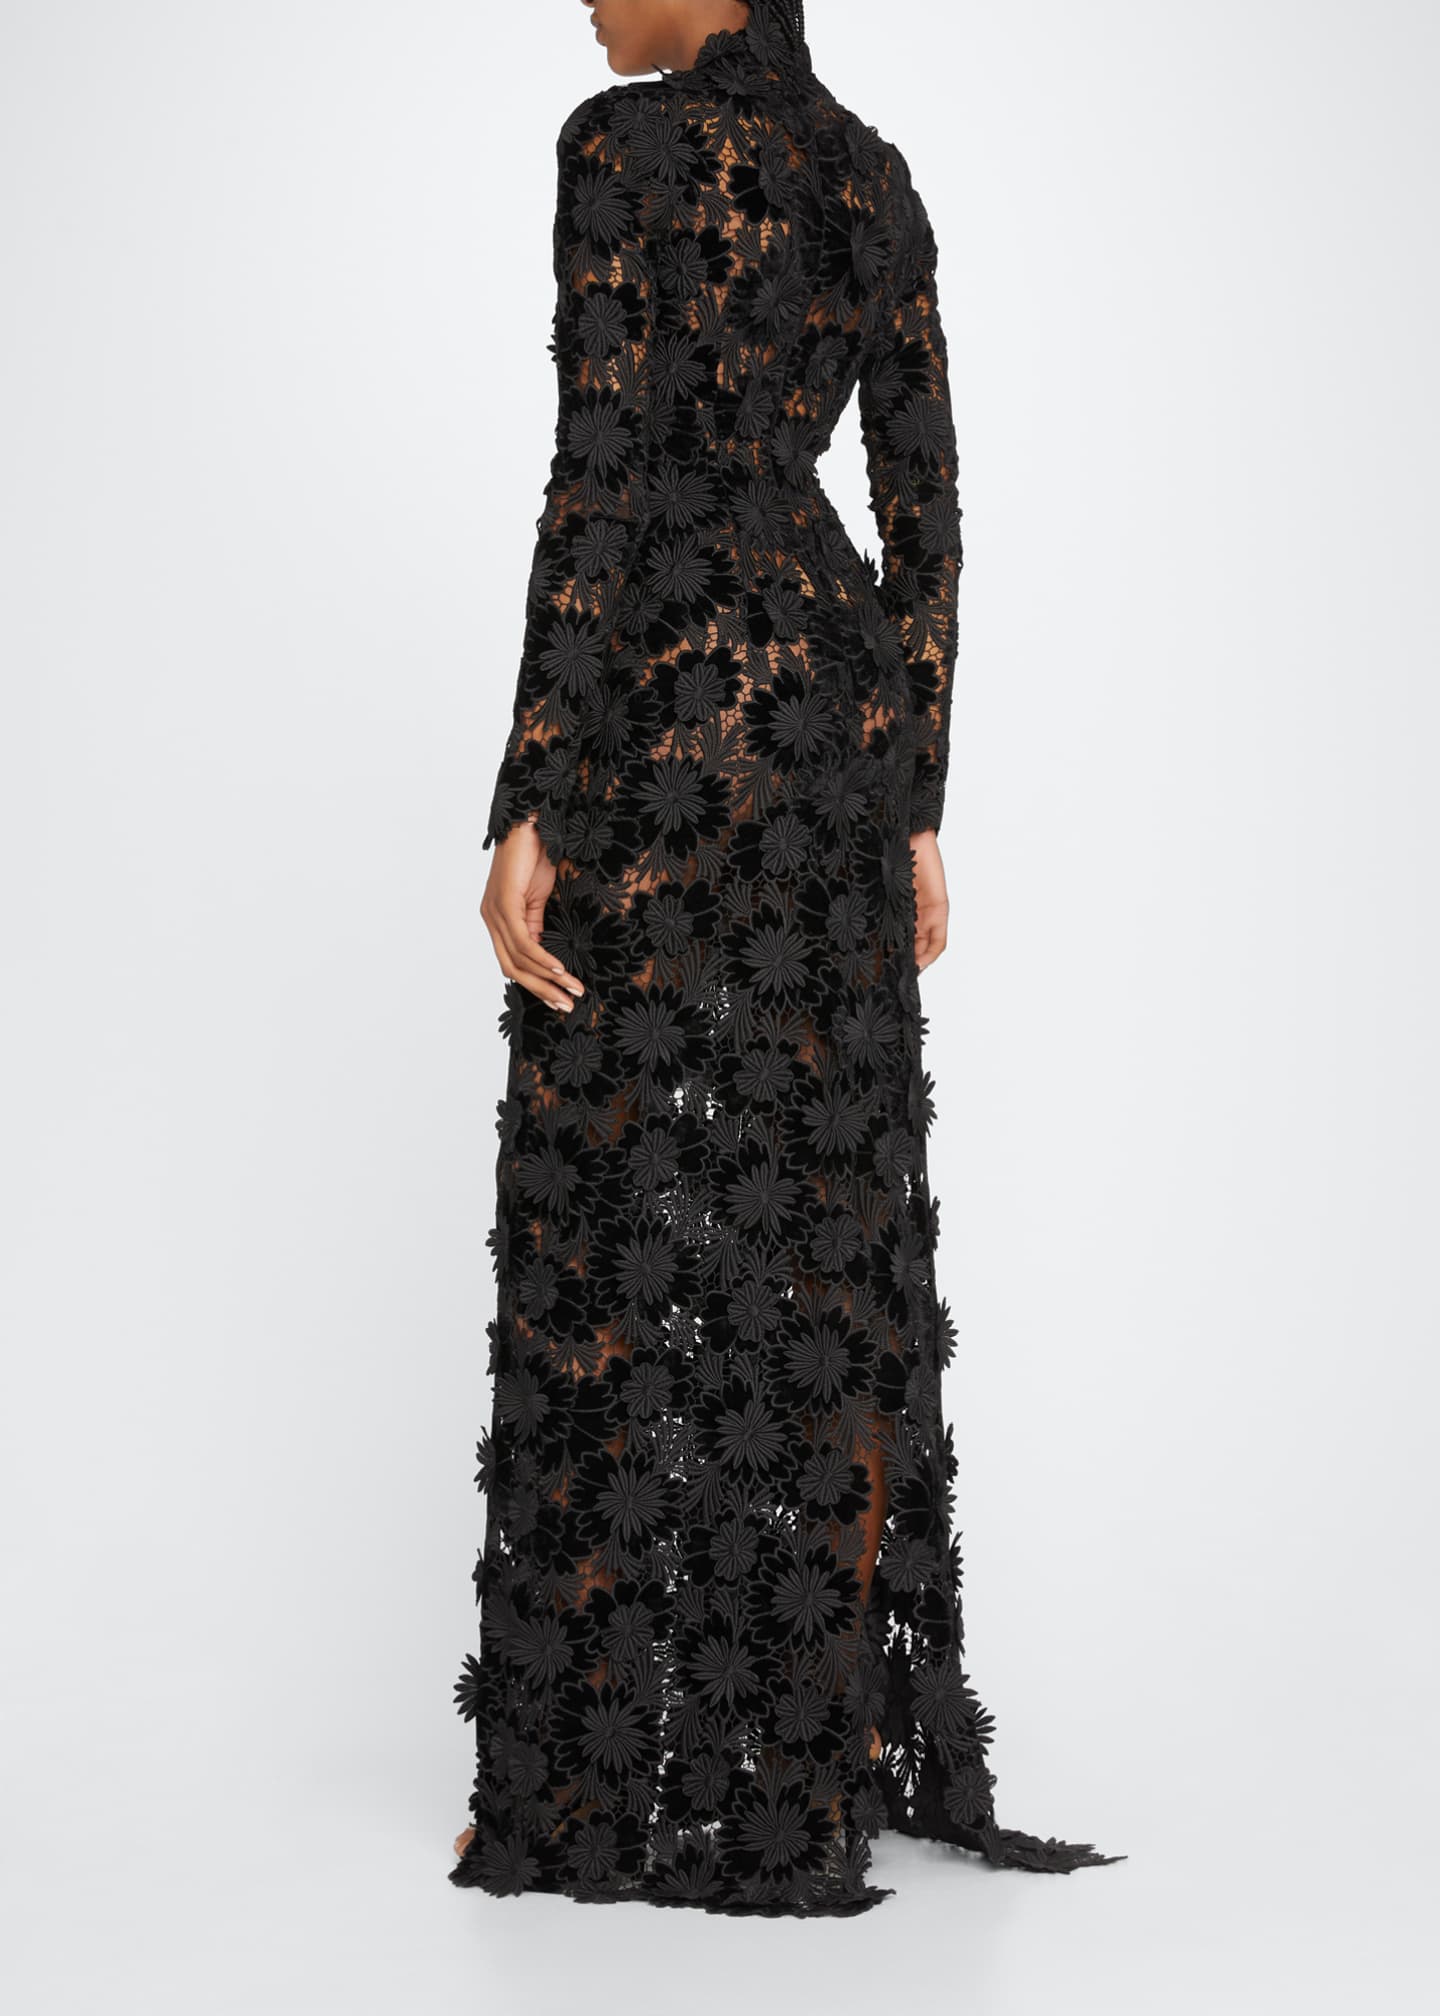 Oscar de la Renta Floral Embroidered Velvet Lace Gown - Bergdorf Goodman